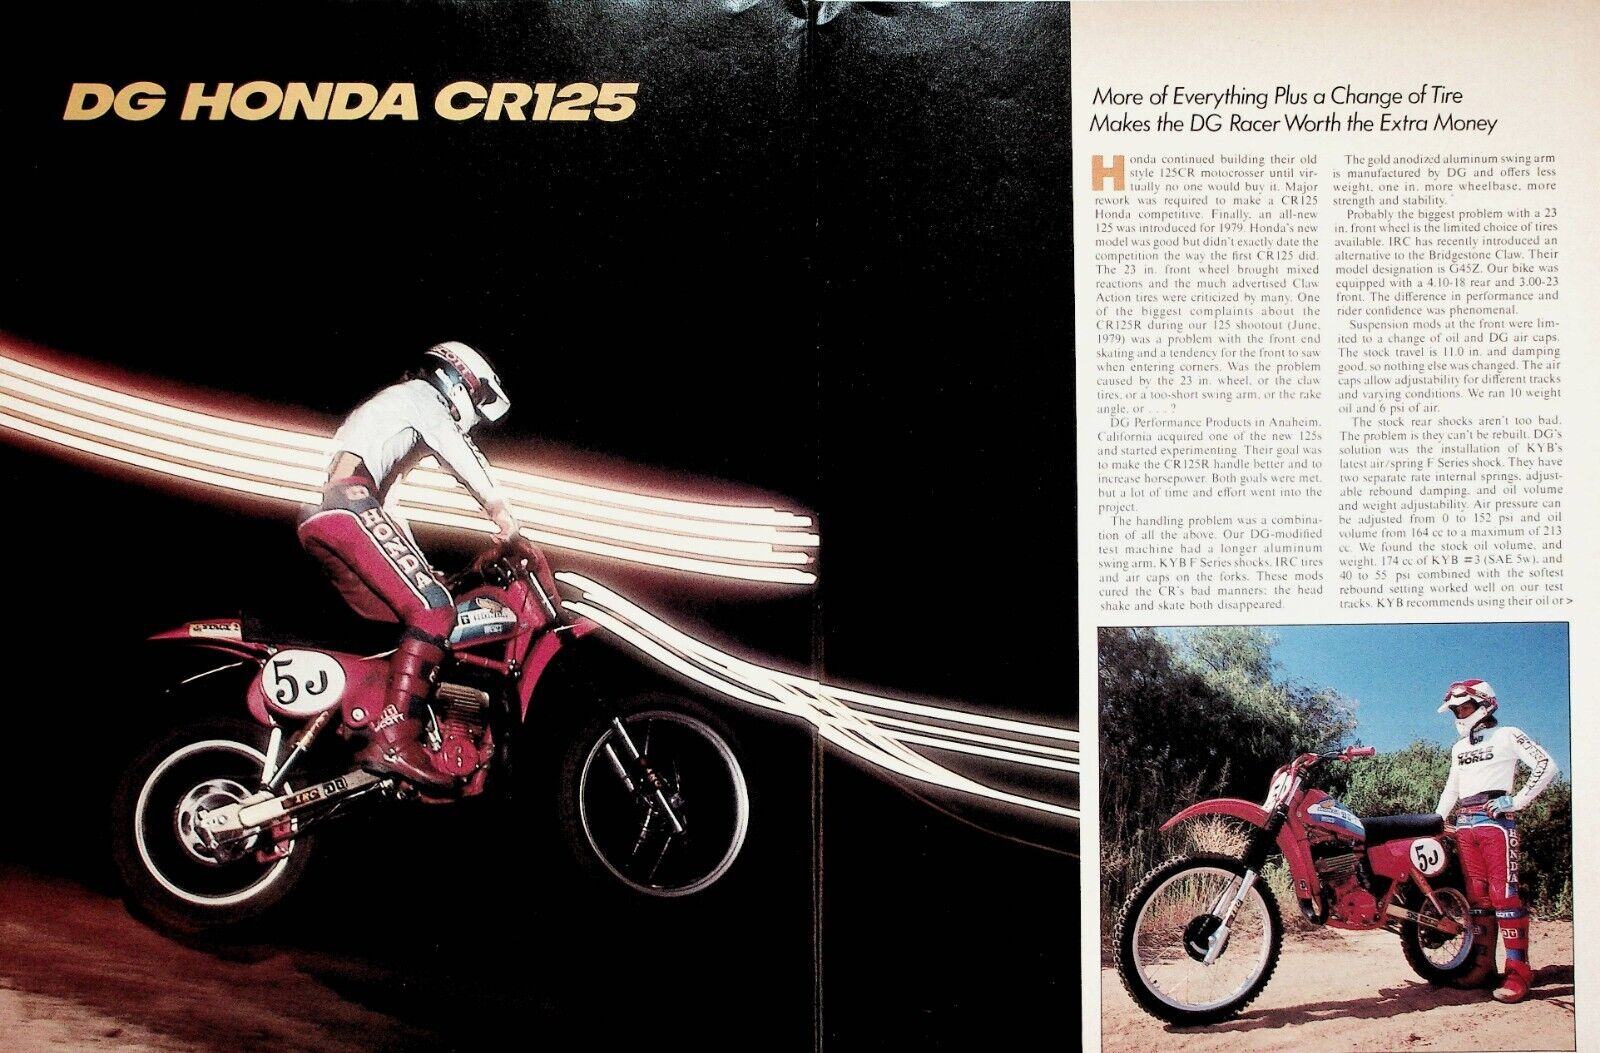 1979 DG Honda CR125 - 5-Page Vintage Motorcycle Article